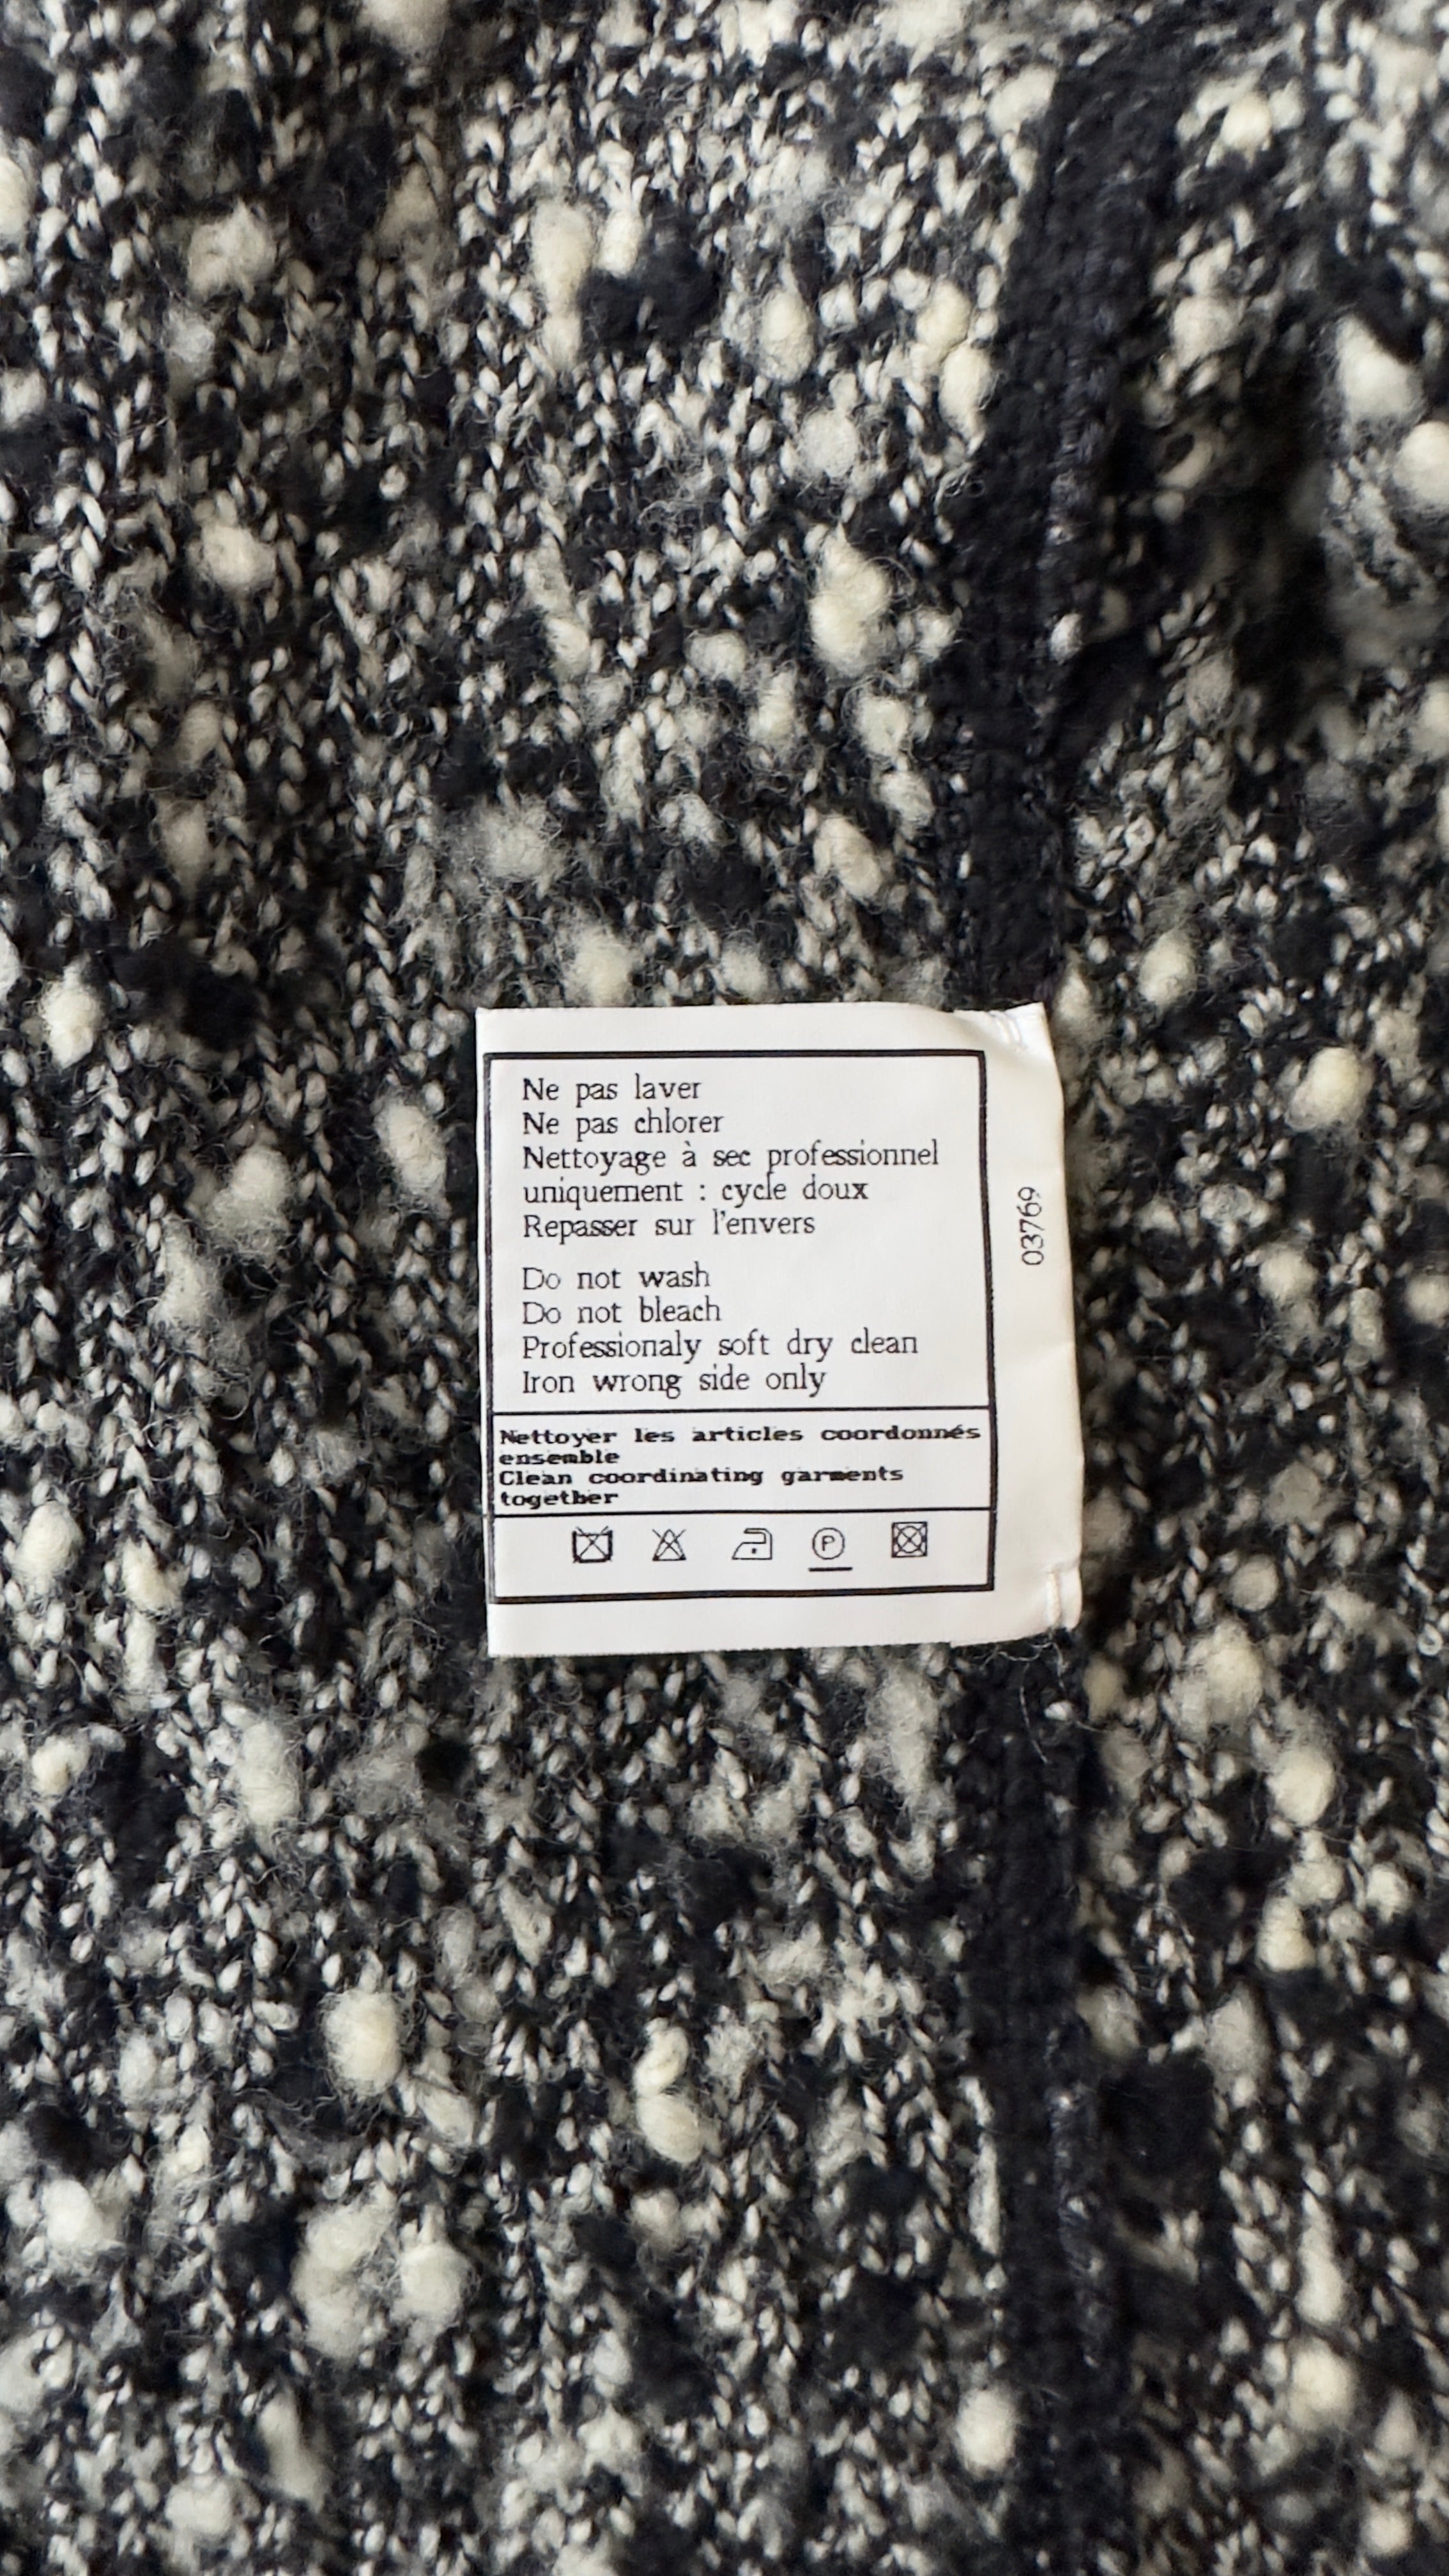 CHANEL 94A Black White Cardigan Jacket & Dress Set 38 シャネル ブラック・ホワイト・カーディガン・ジャケット&ワンピース 即発